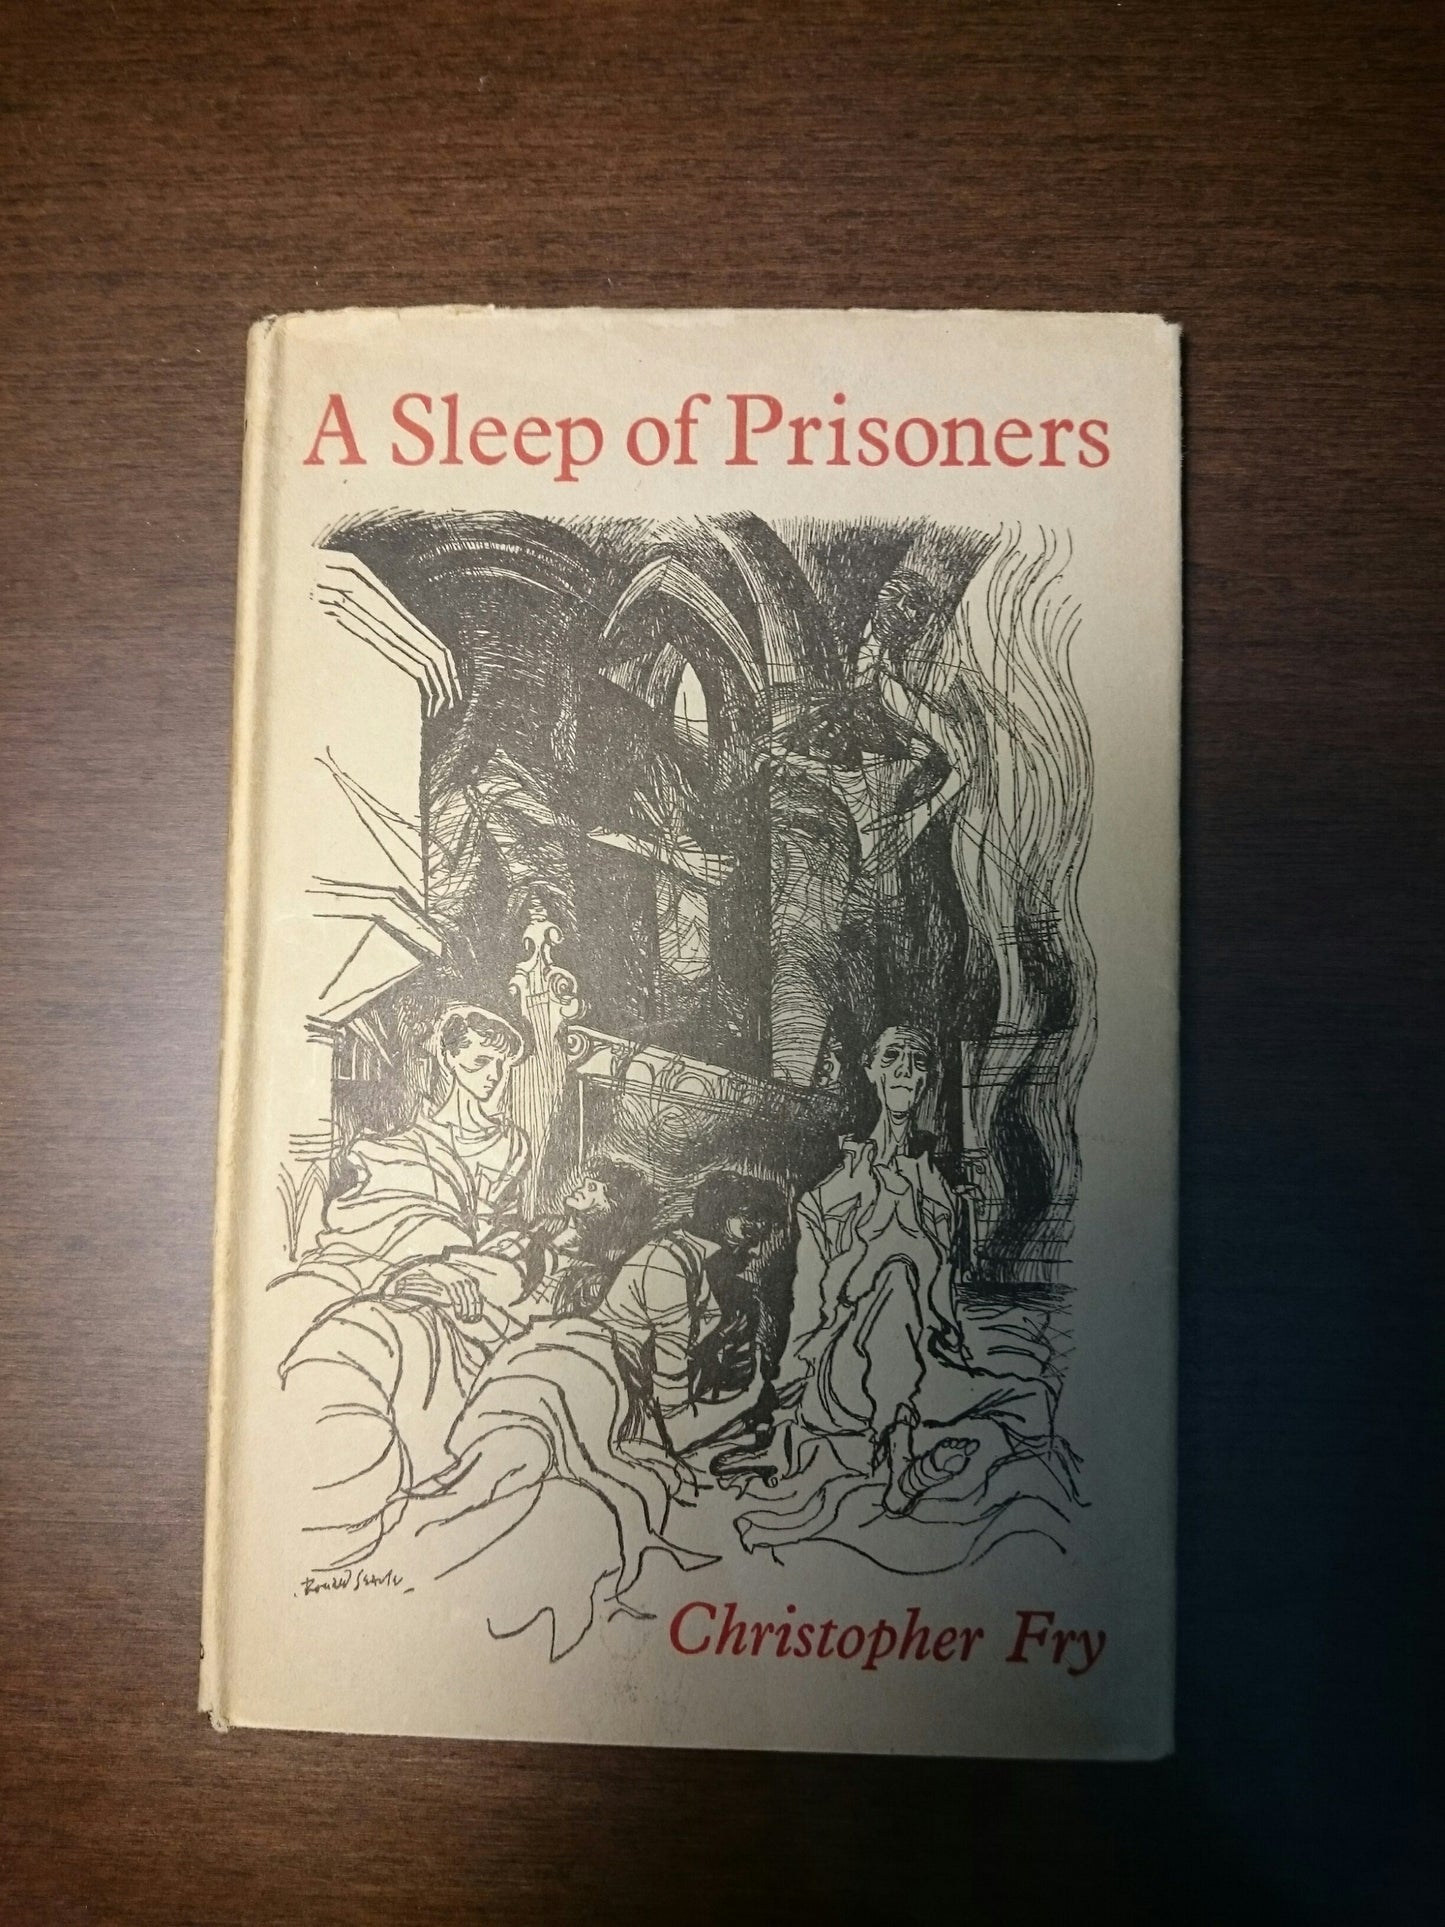 A Sleep of Prisoners